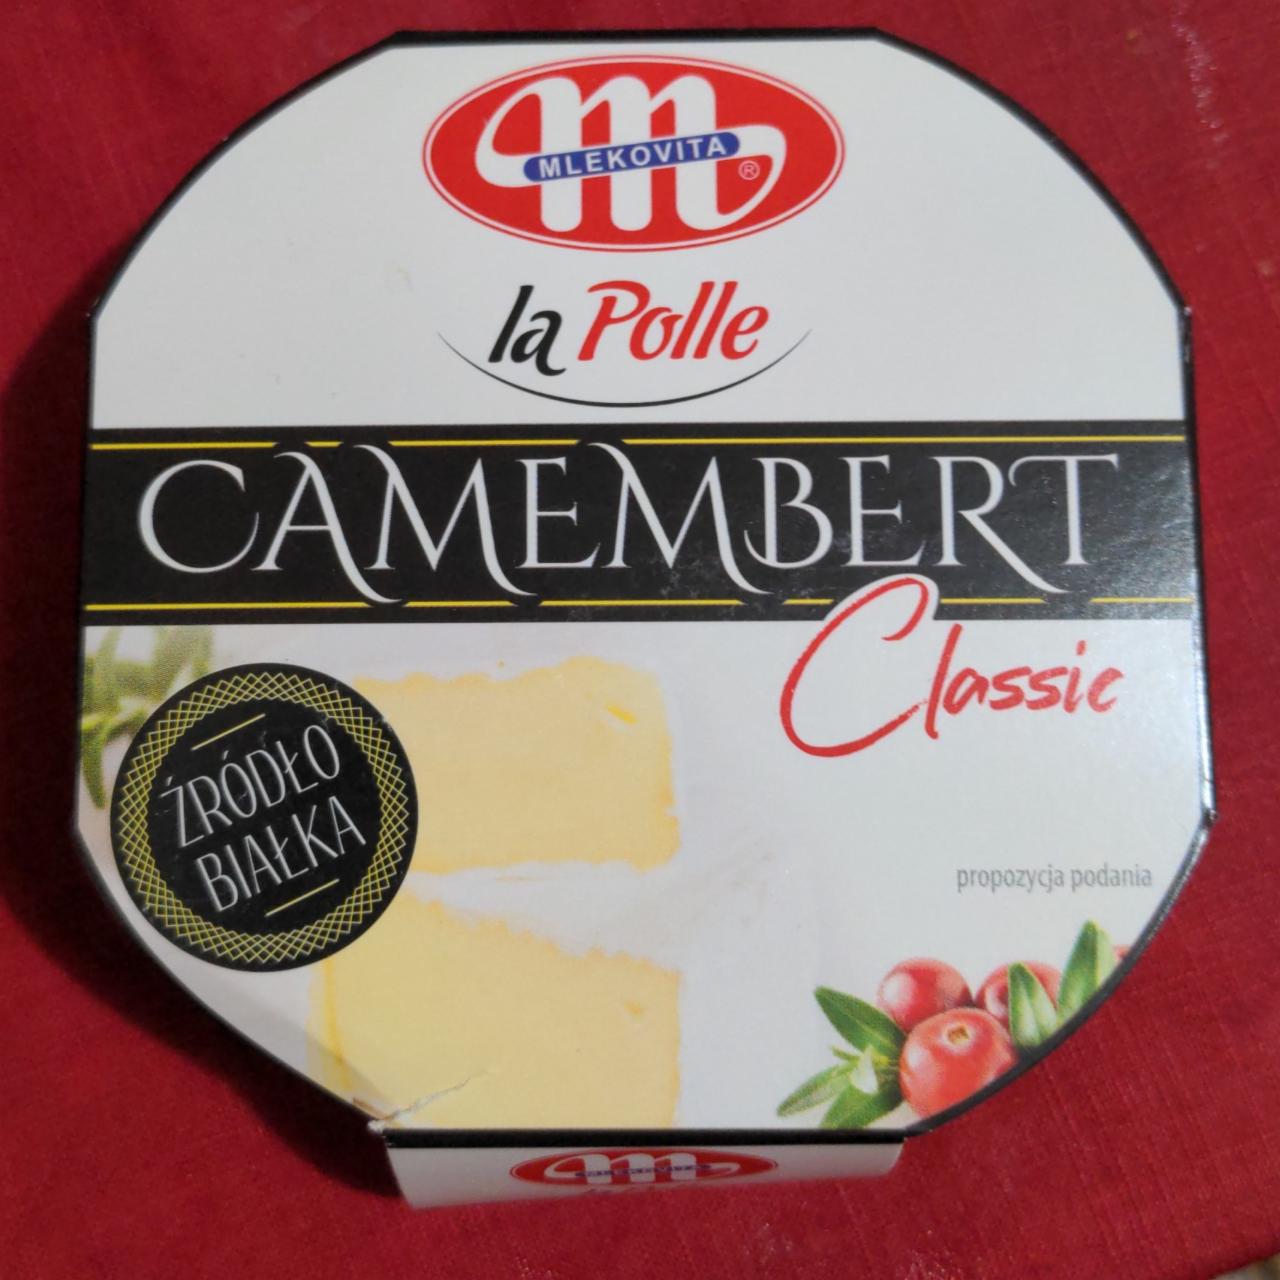 Képek - Camembert sajt La Polle